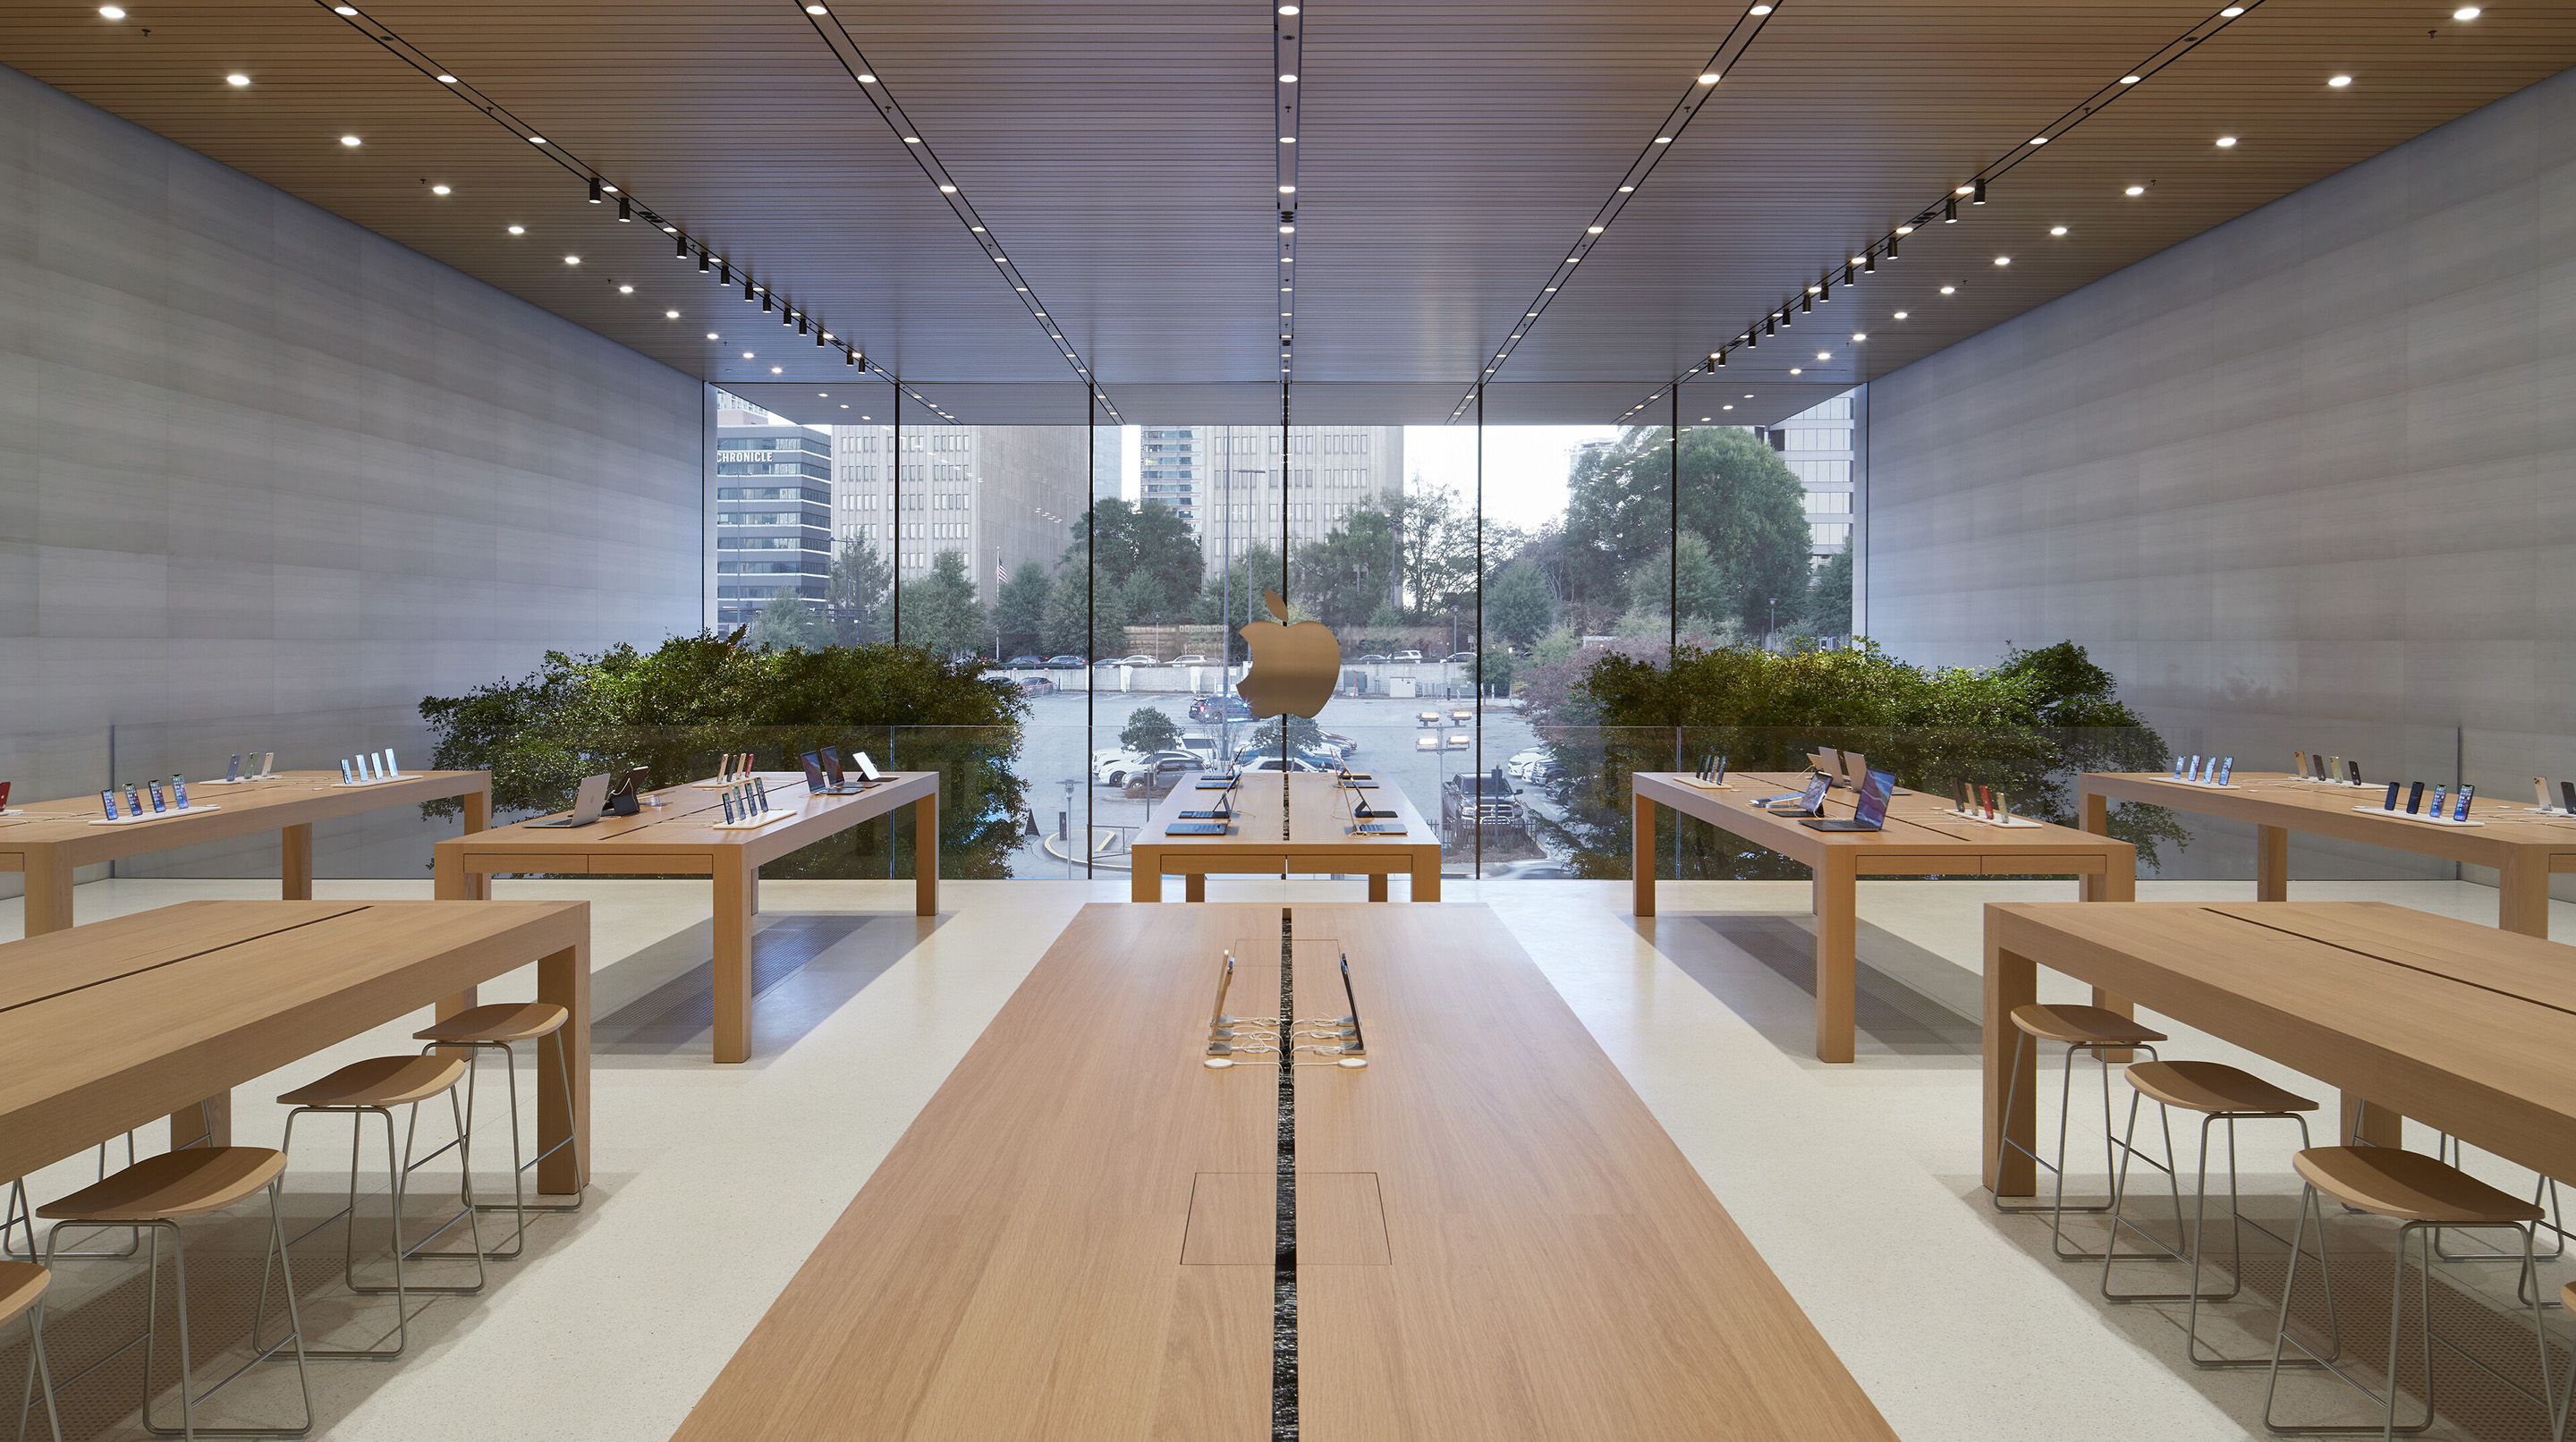 Apple Store Addict - Review of Lenox Square, Atlanta, GA - Tripadvisor